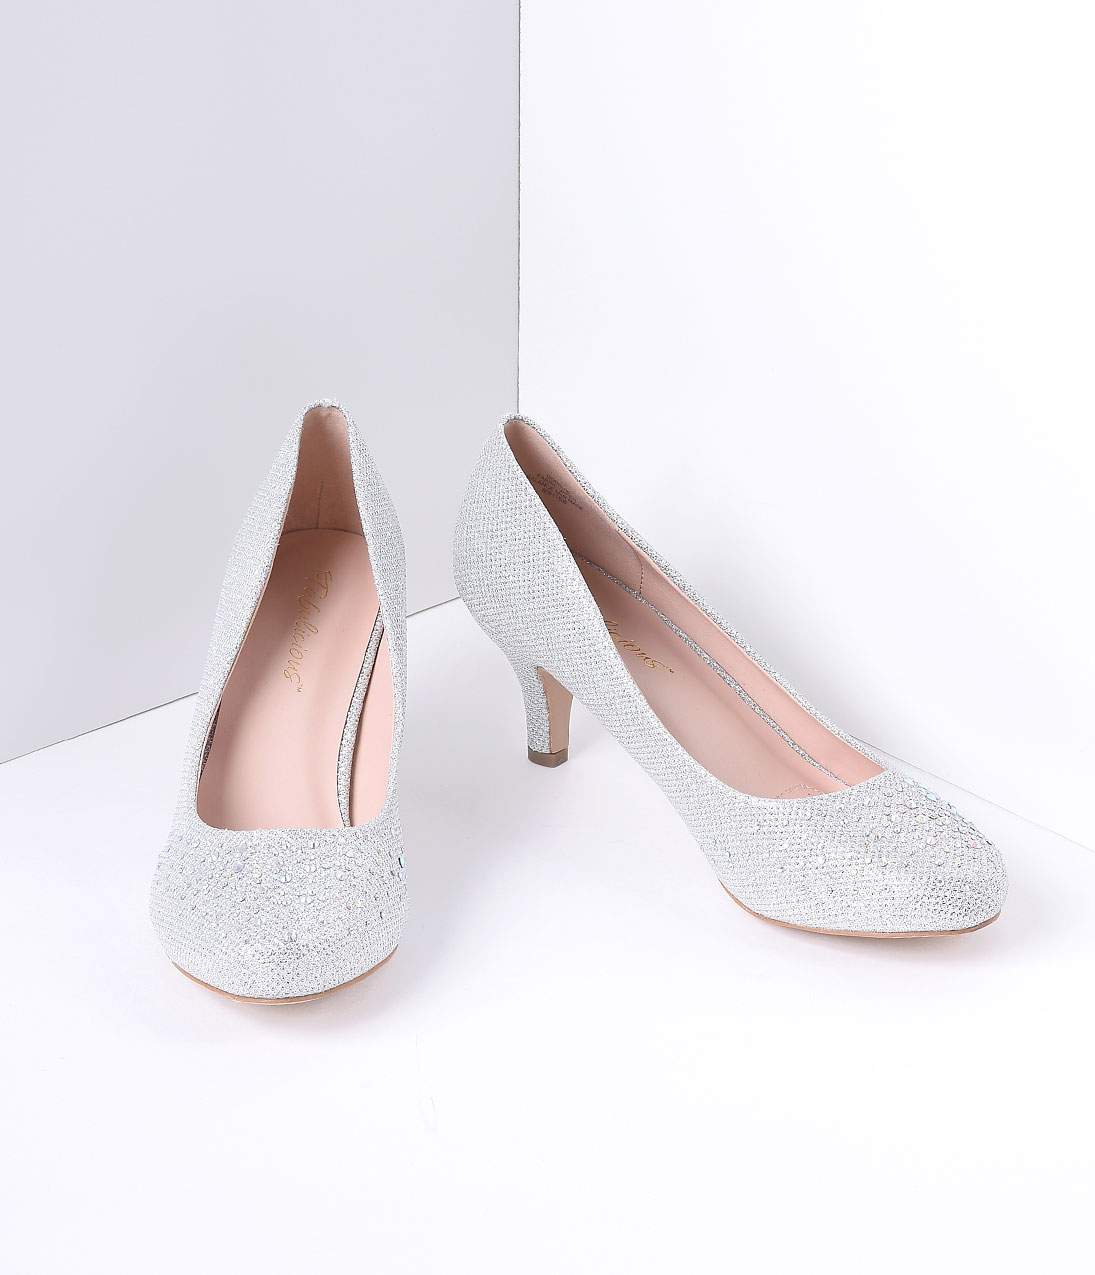 Vintage Kitten Heels, Ivory Satin Shoes, Sixties Style Two Part Shoe,  Beaded Wedding Shoes, UK 5, 03200300 - Etsy